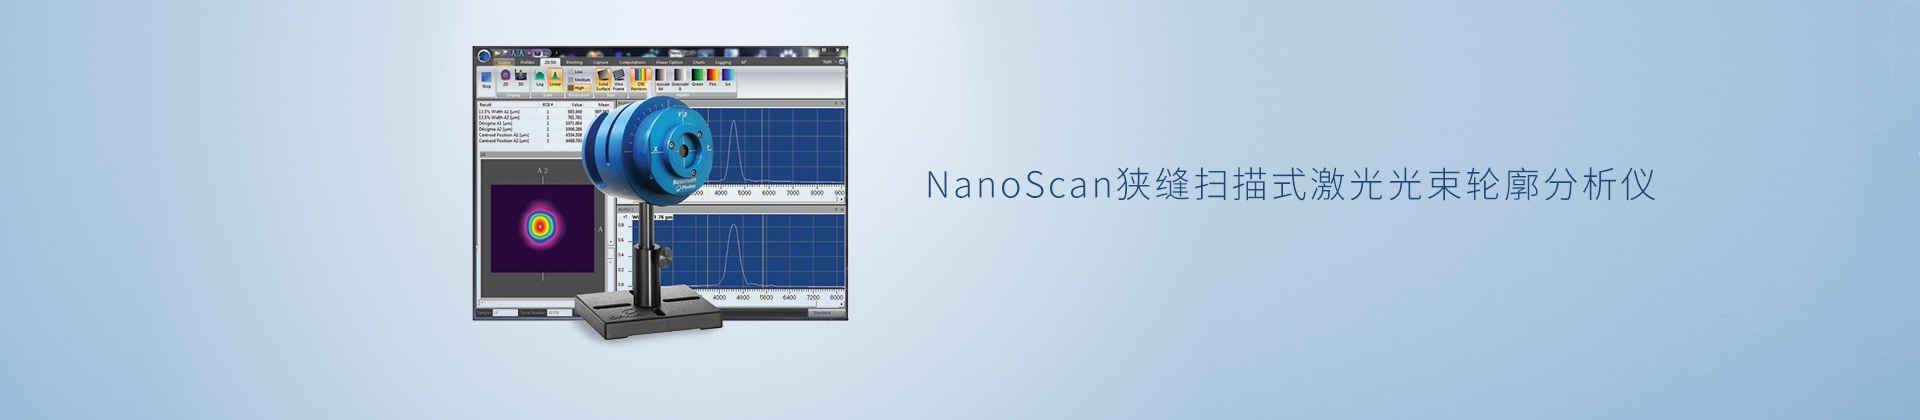 NanoScan狭缝扫描式激光光束轮廓分析仪